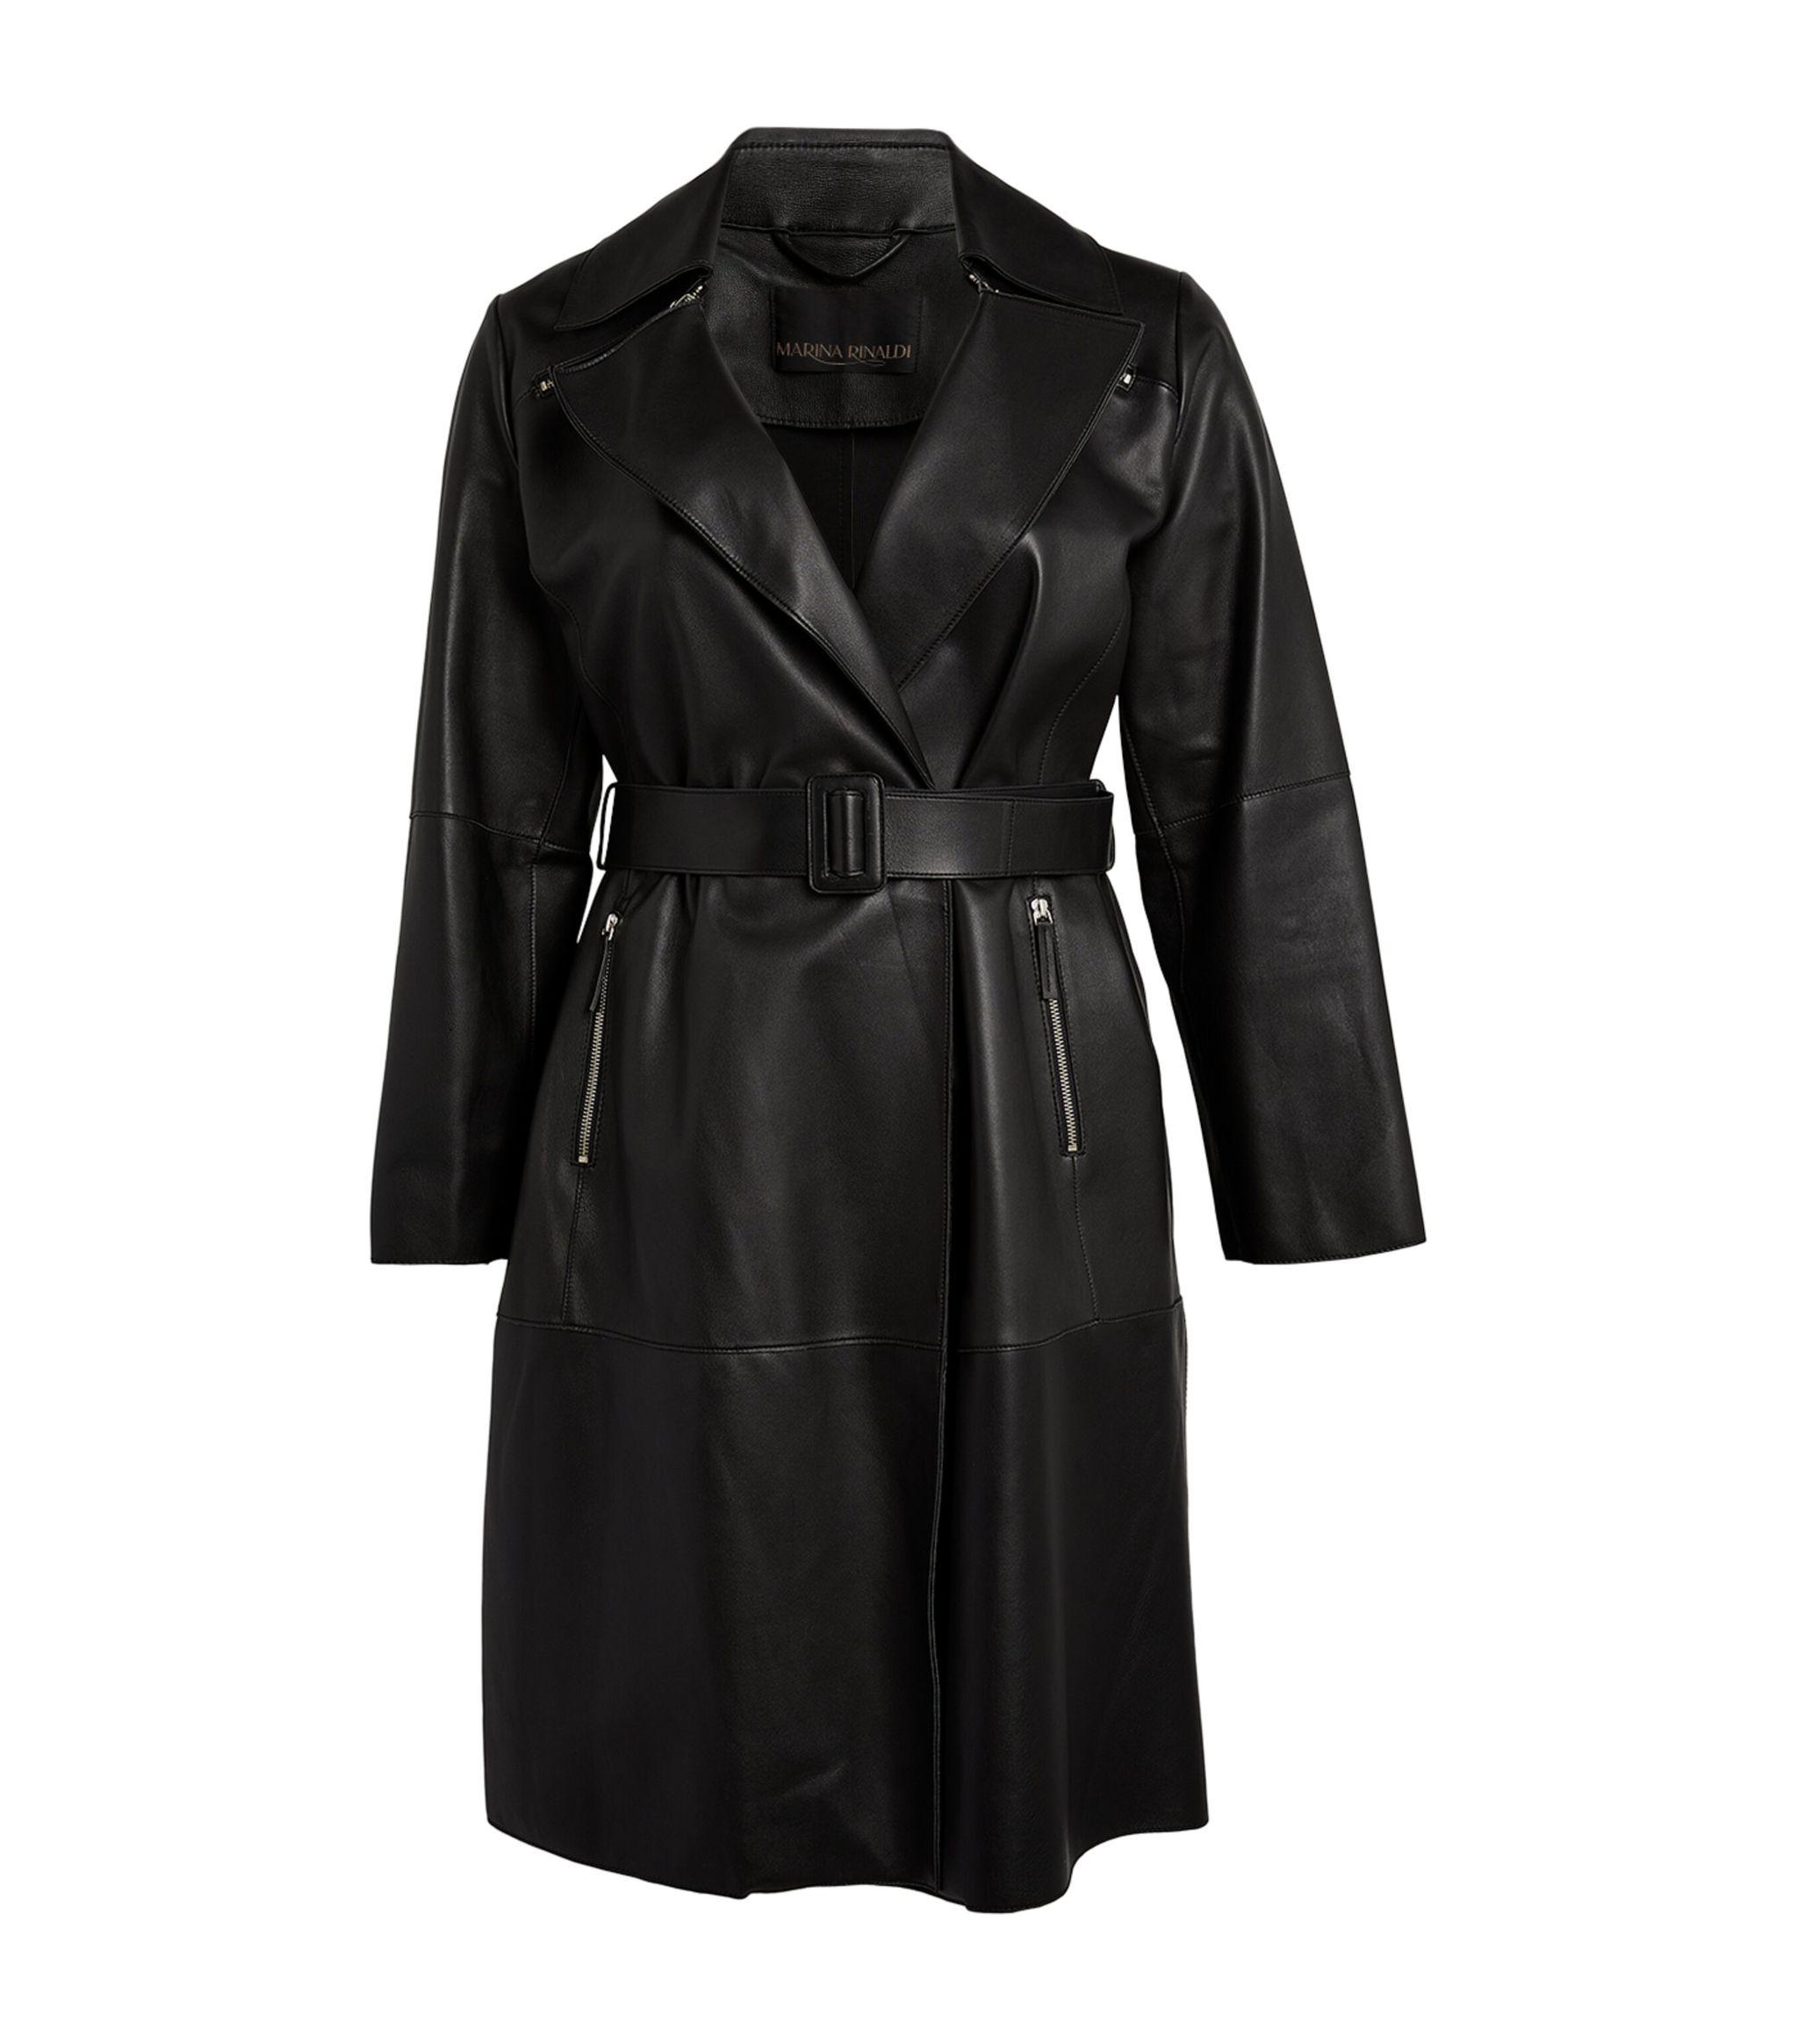 Marina Rinaldi Leather Essenza Trench Coat in Black | Lyst